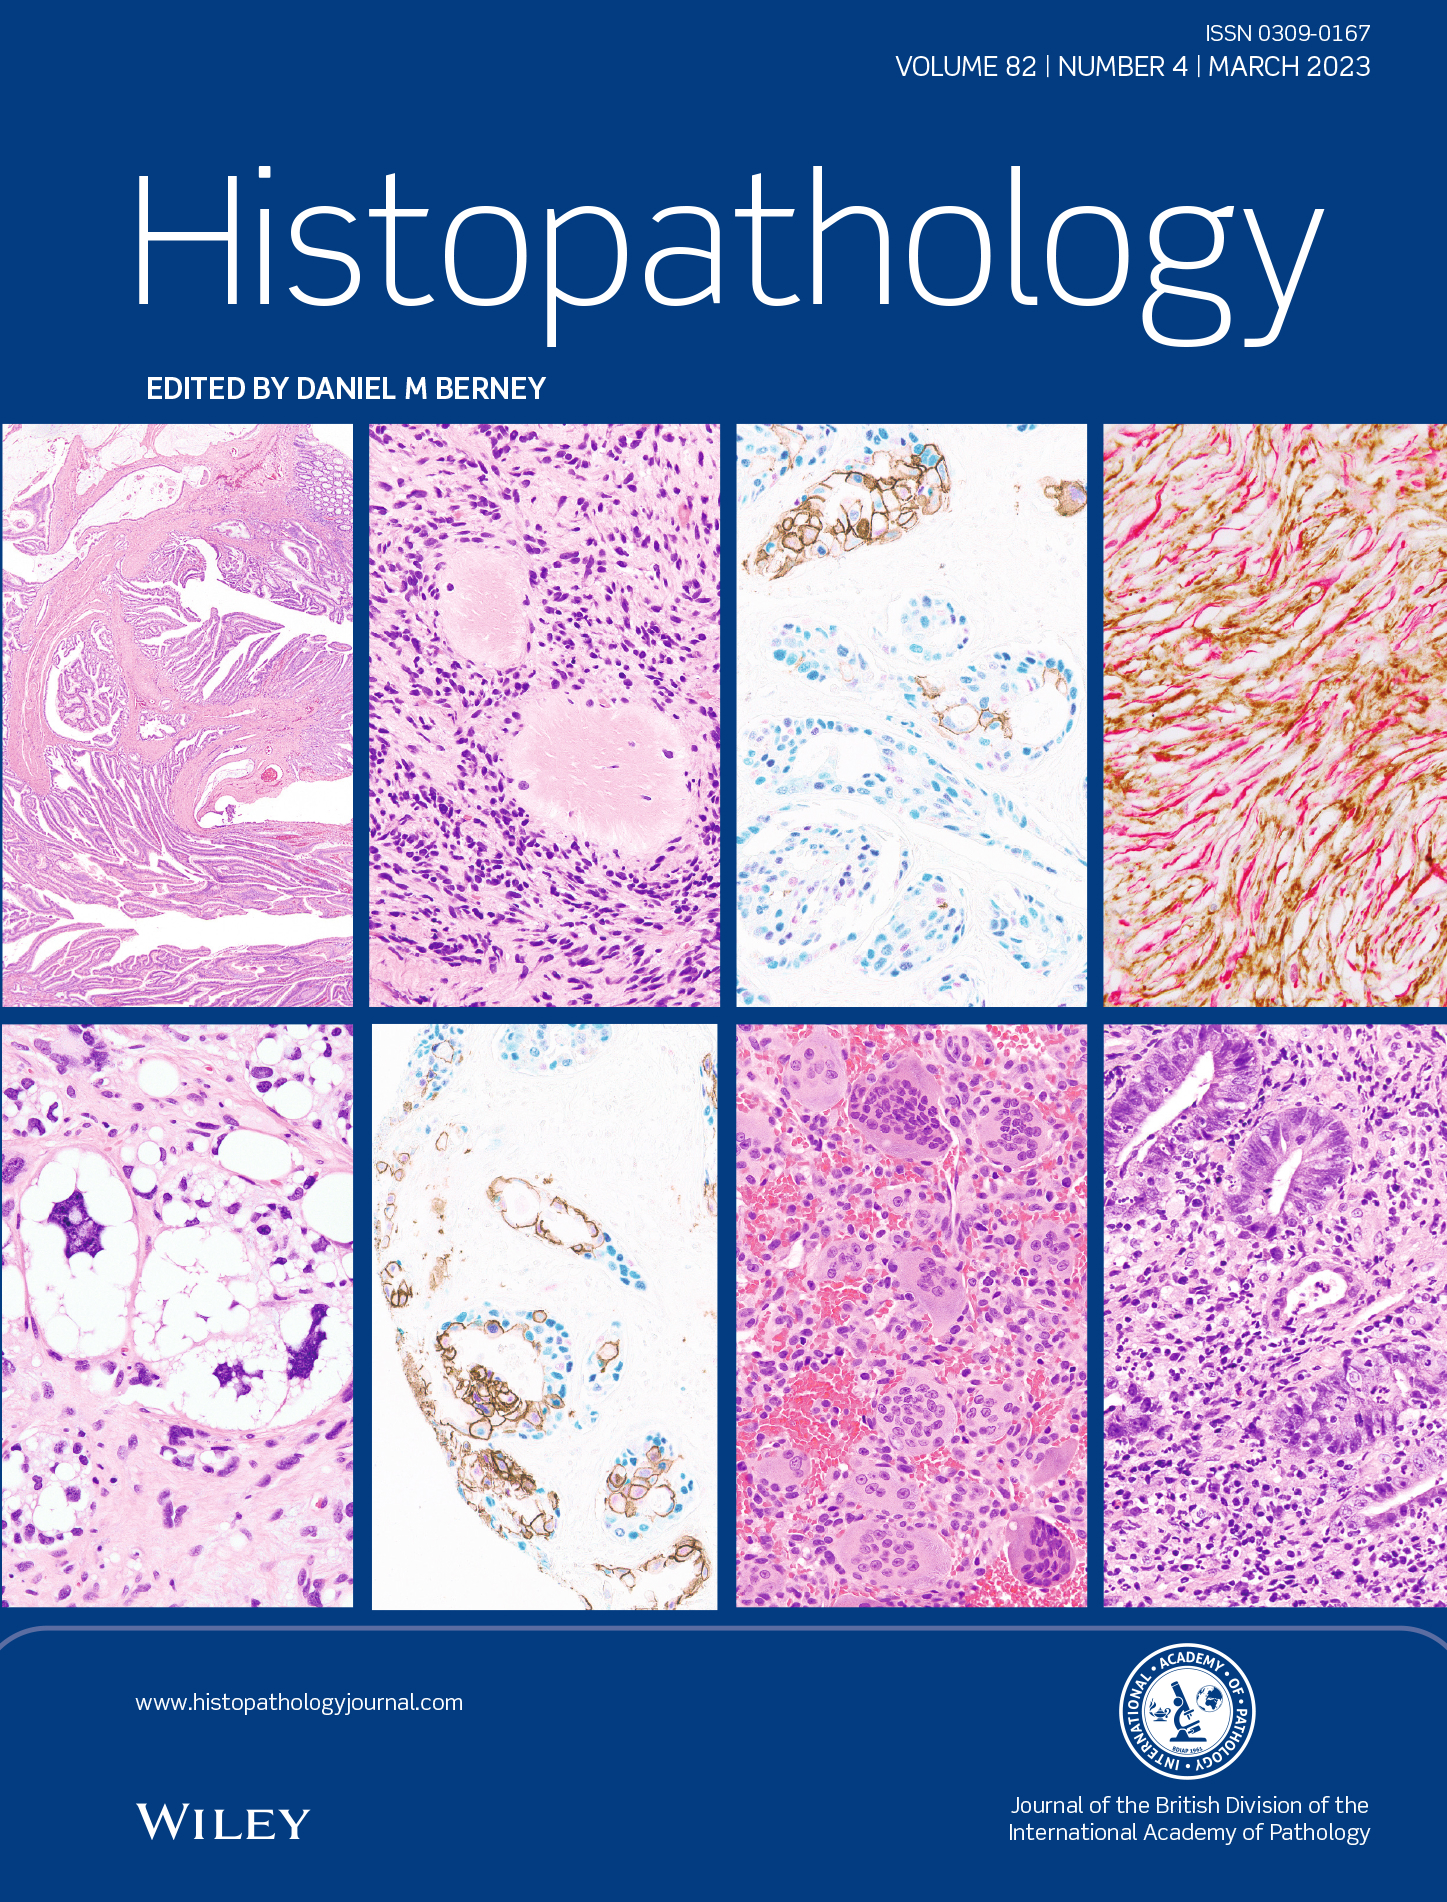 Histopathology Latest Journal Issue Now Available image